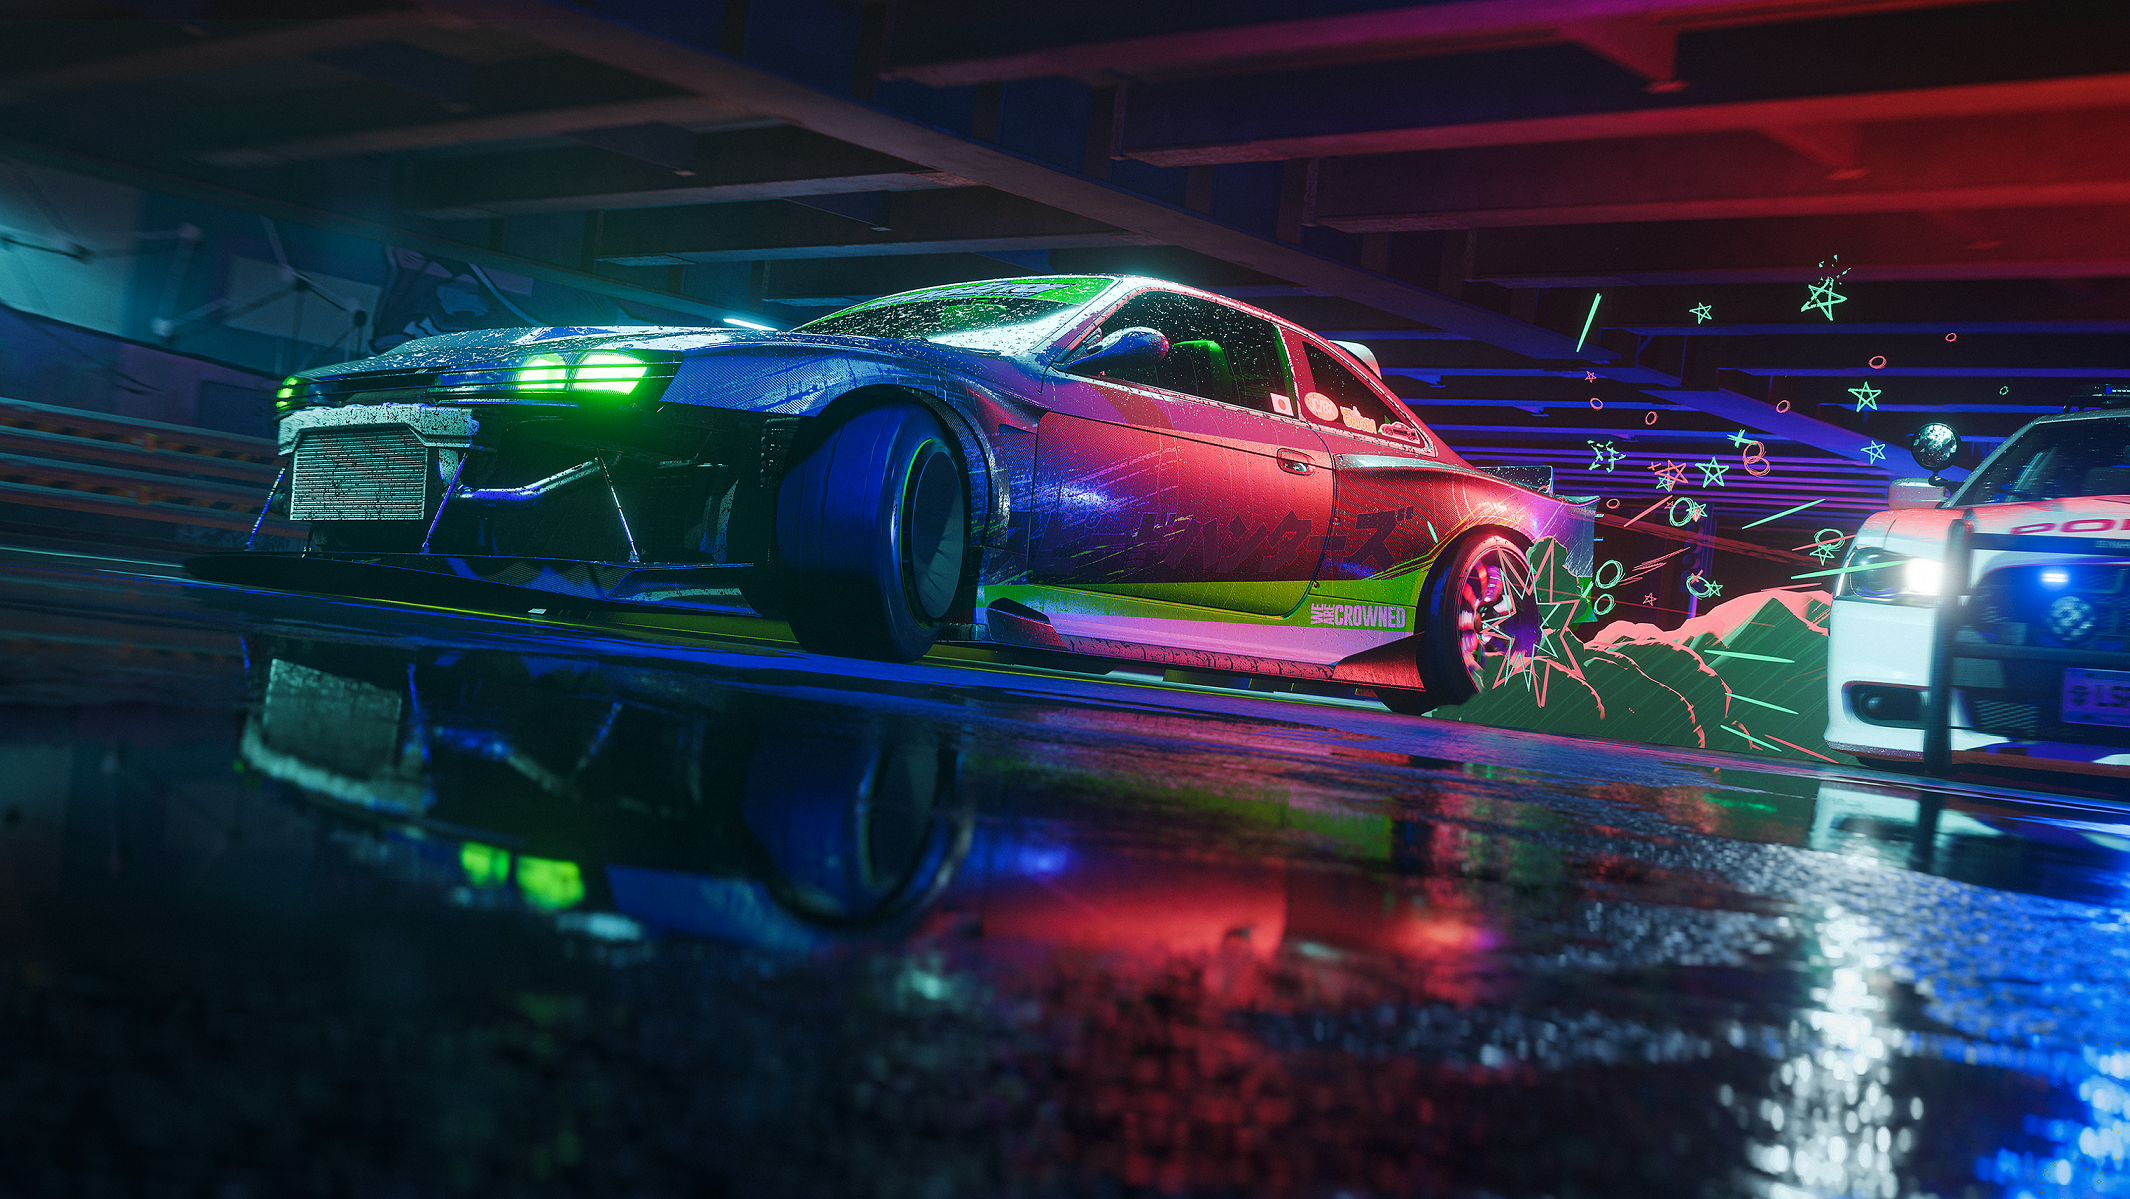 Obrázek XSX - Need for Speed Unbound